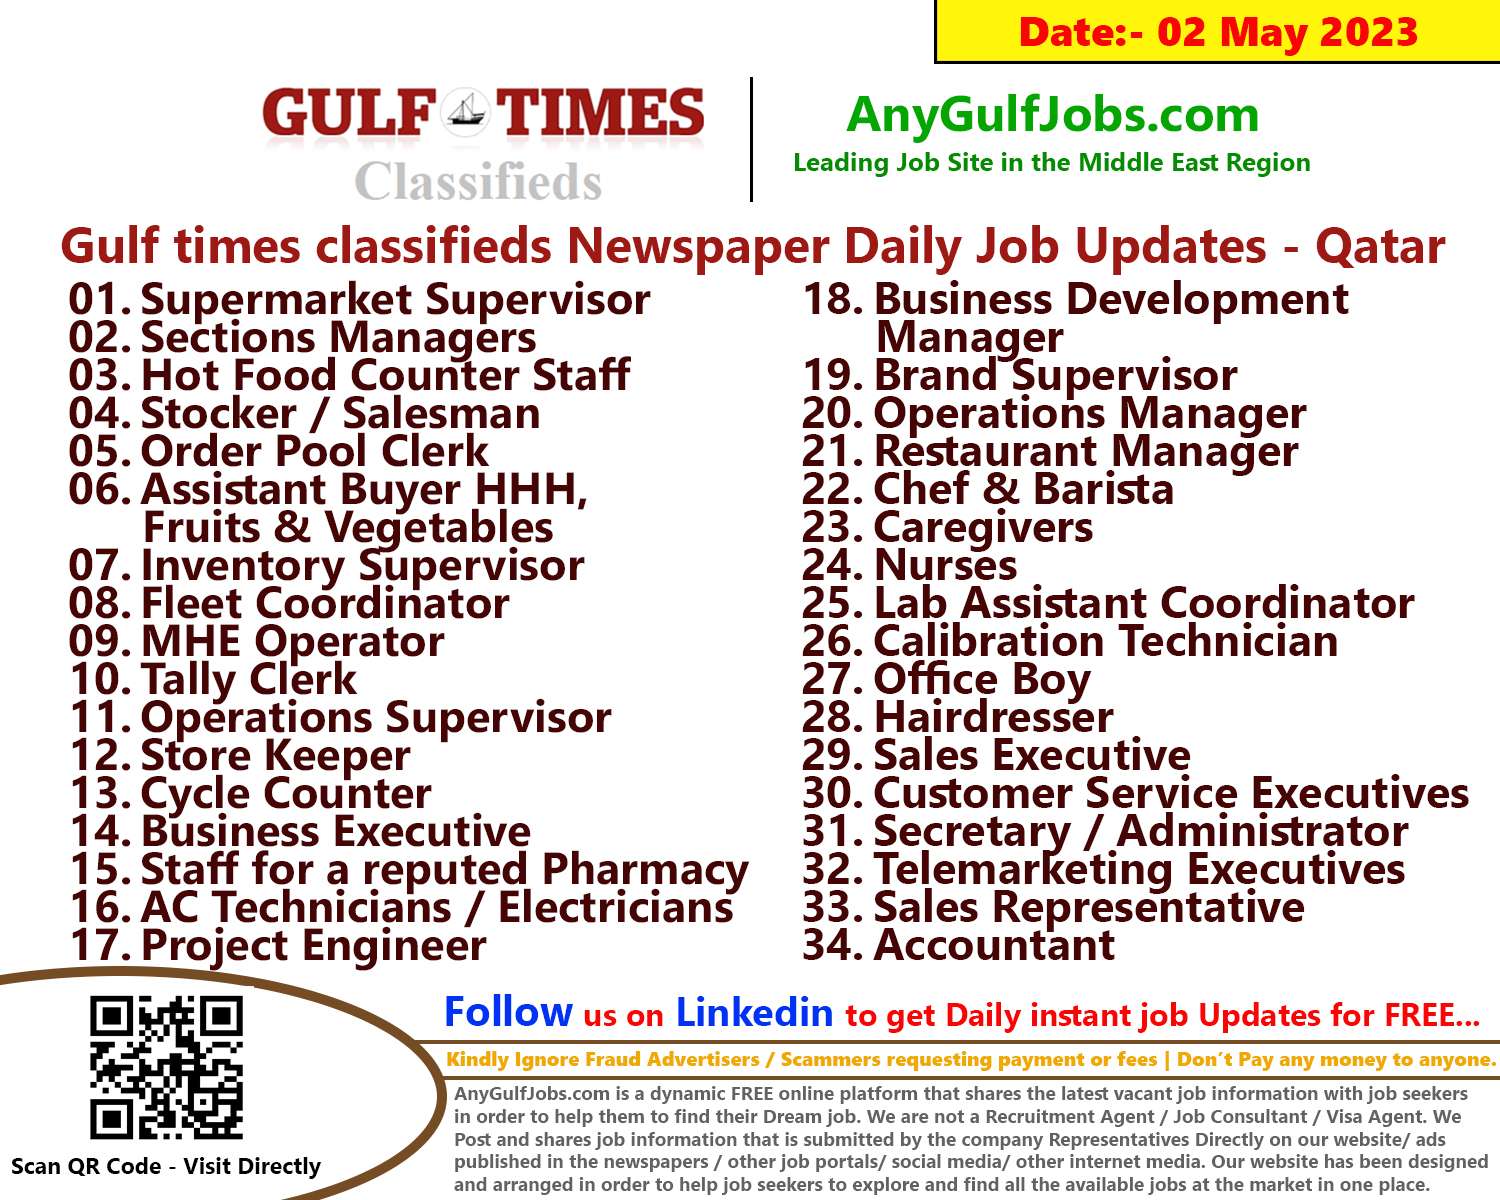 Gulf times classifieds Job Vacancies Qatar - 02 May 2023